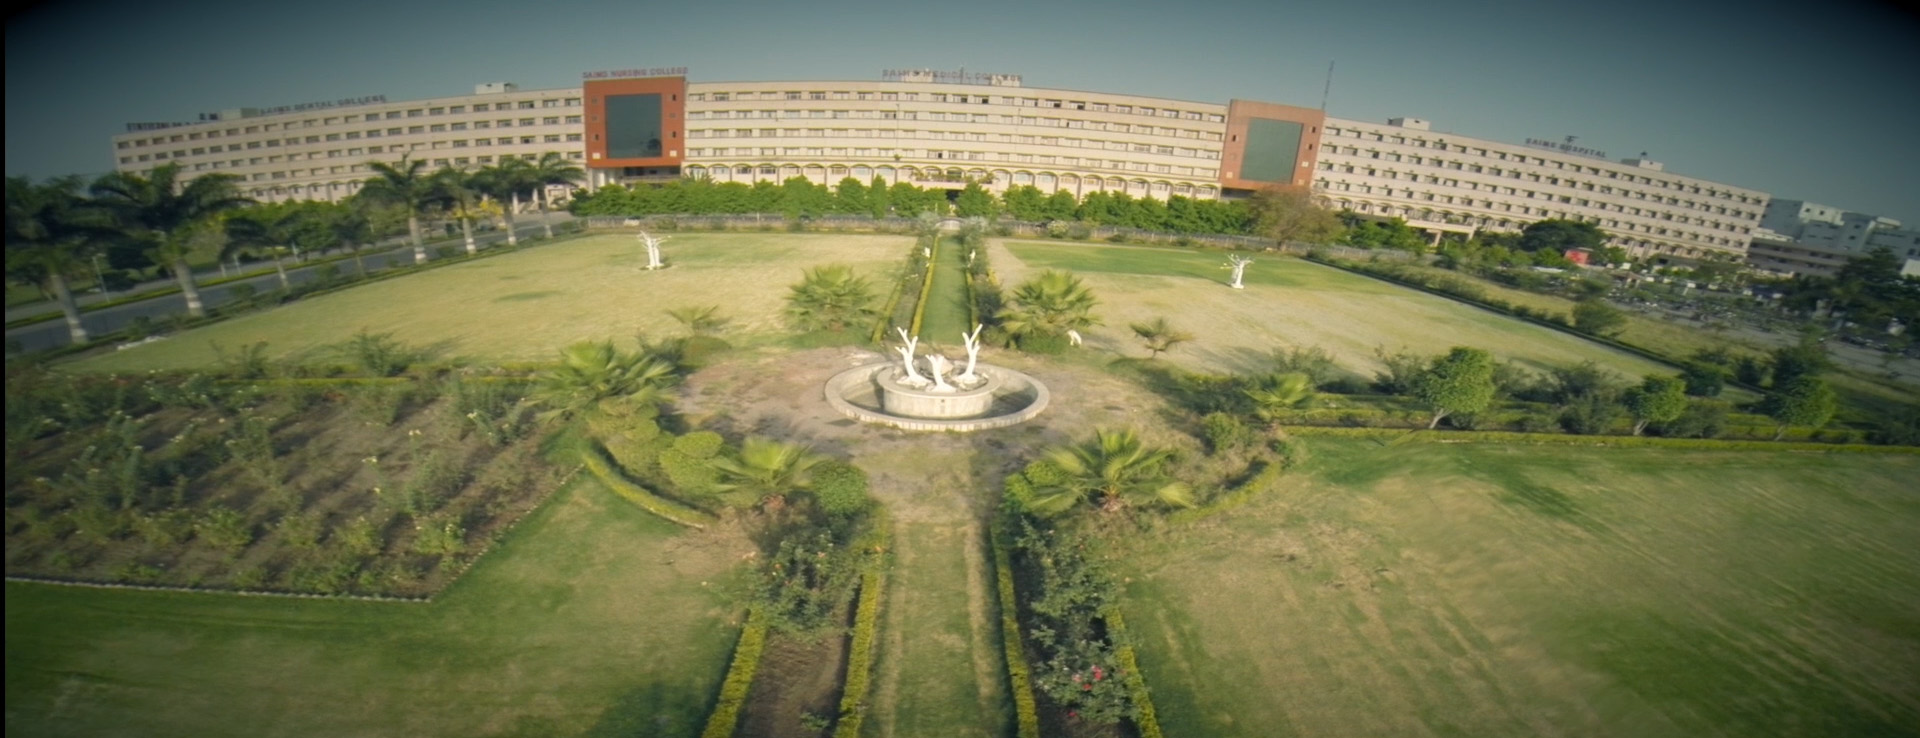 Sri Aurobindo Institute of Pharmacy, Indore Image